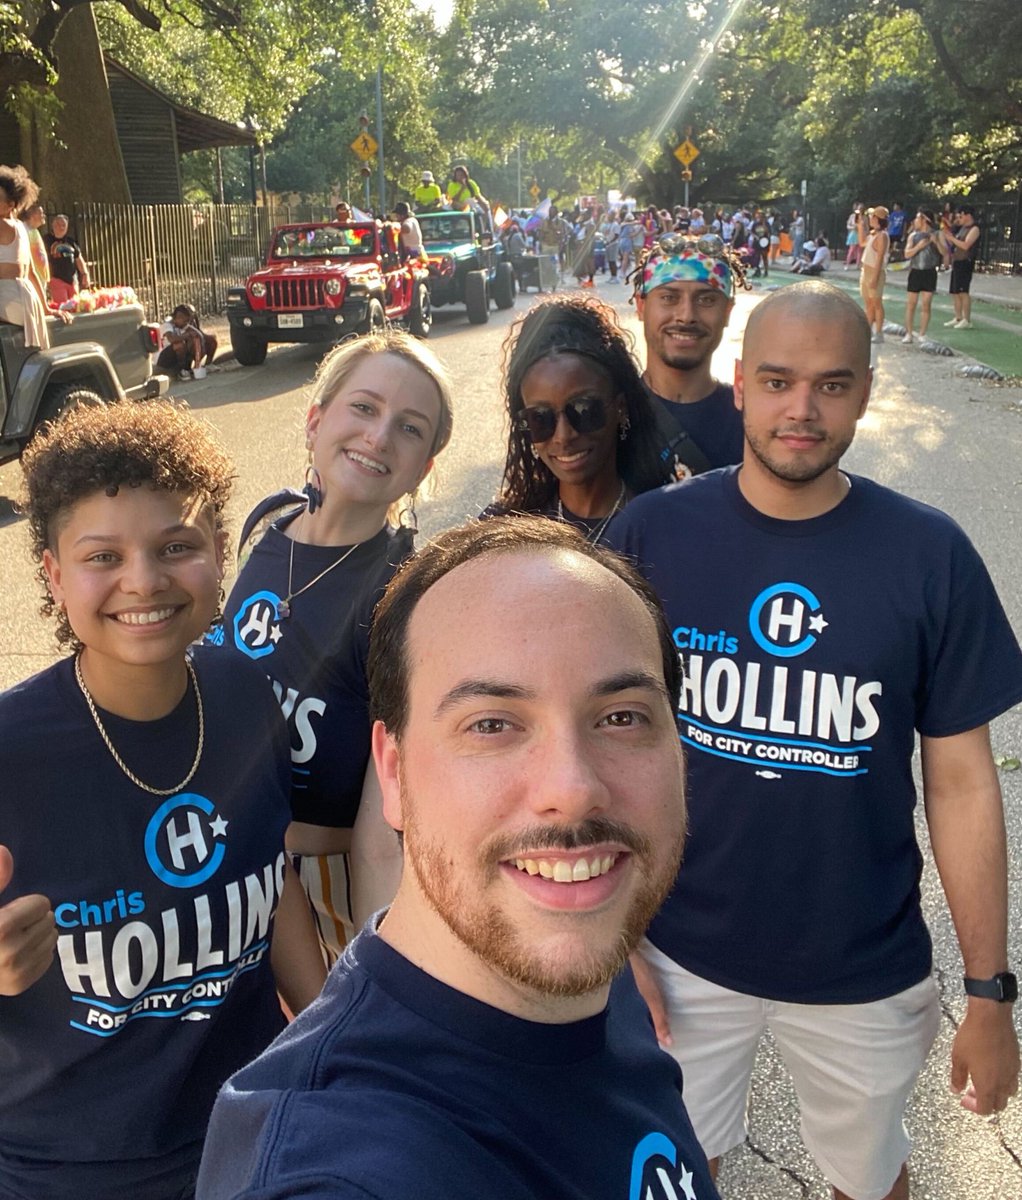 Team Hollins representing tonight at the Houston Pride Parade! #HoustonPride 🏳️‍🌈🏳️‍⚧️